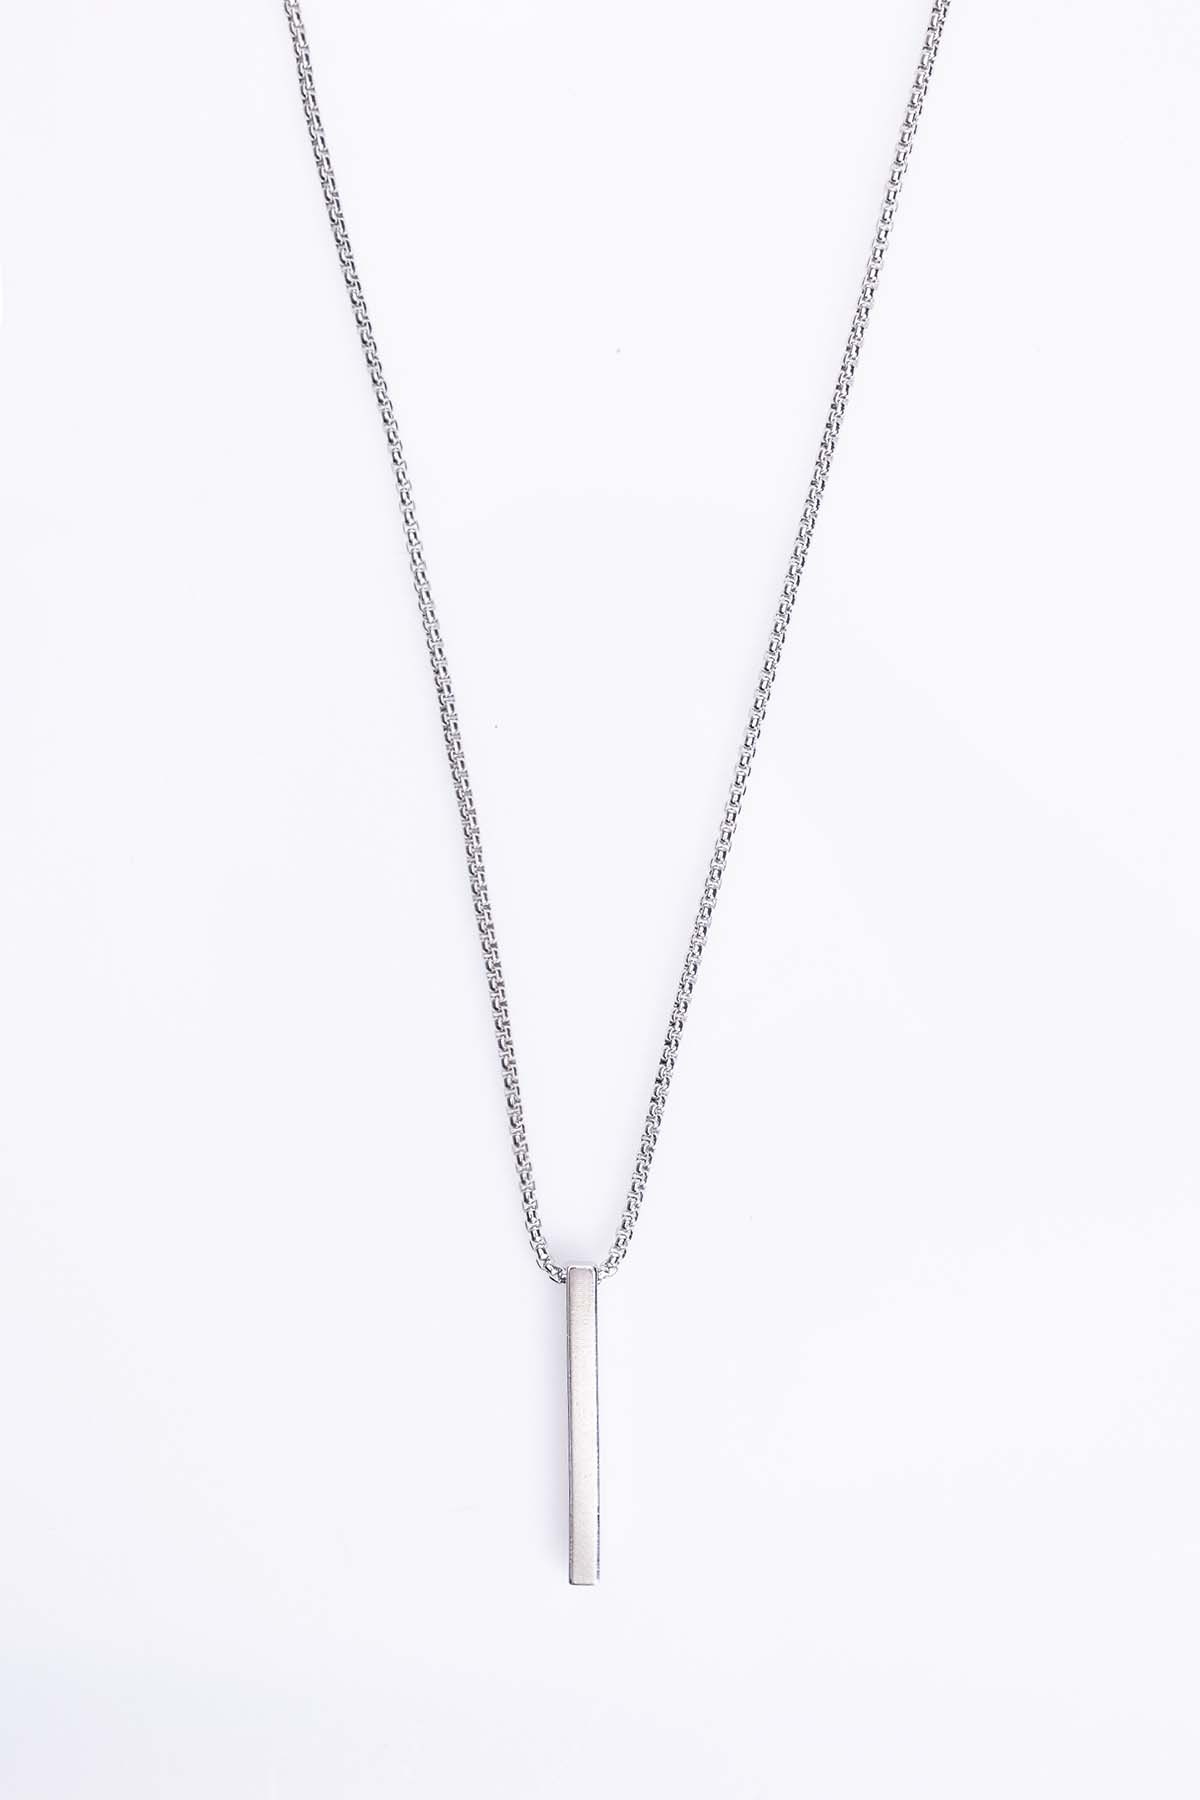  Silver Necklace